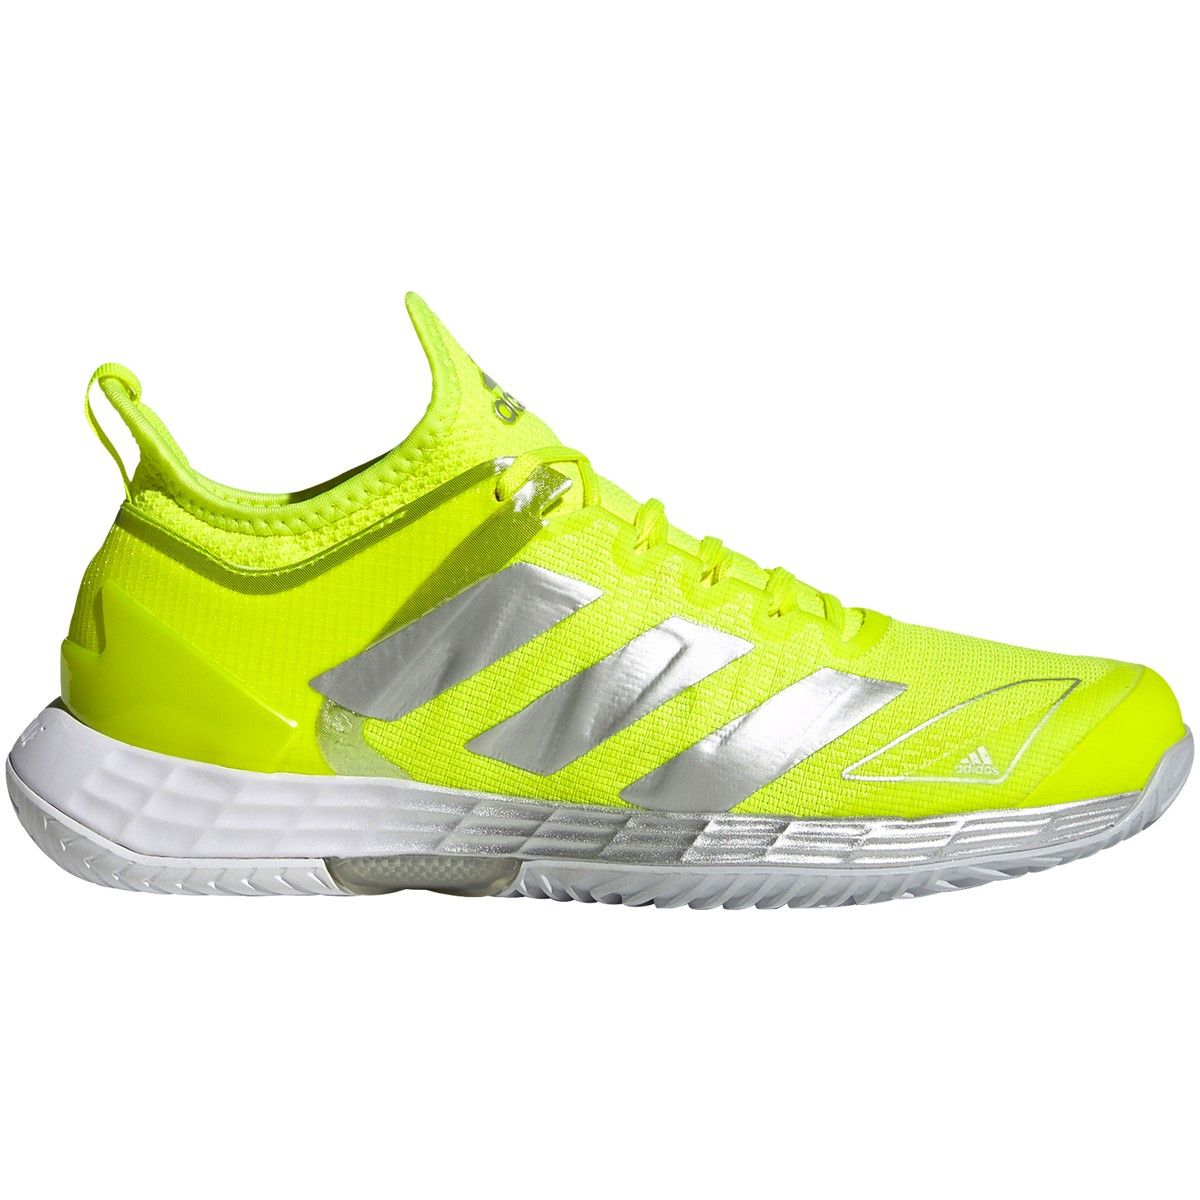 adidas Adizero Ubersonic 4 Women's Tennis Shoes FX1369